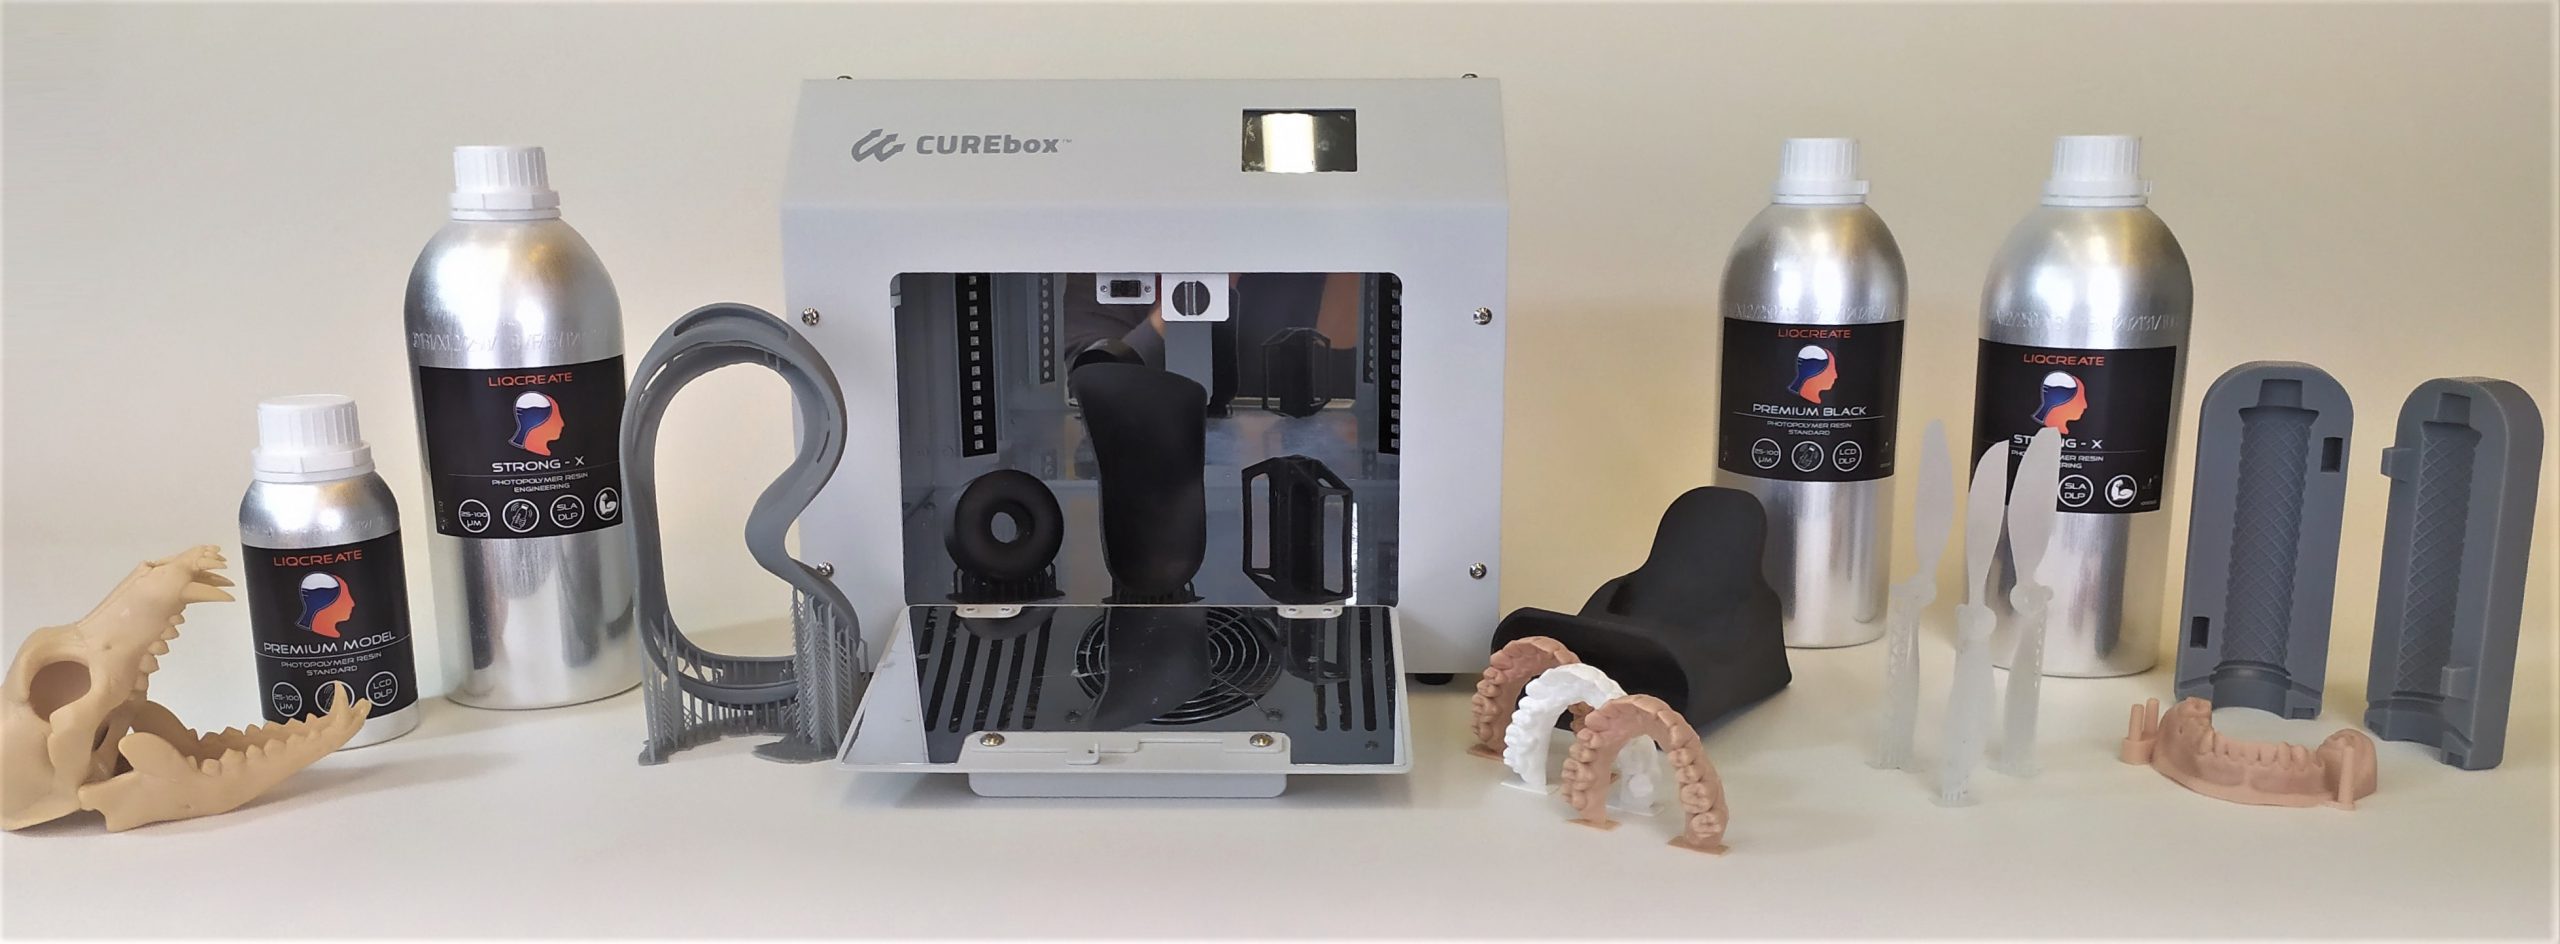 Wicked ingenieria CUREbox compatible con resinas Liqcreate glicerol resina Uv 3d-printing sticky